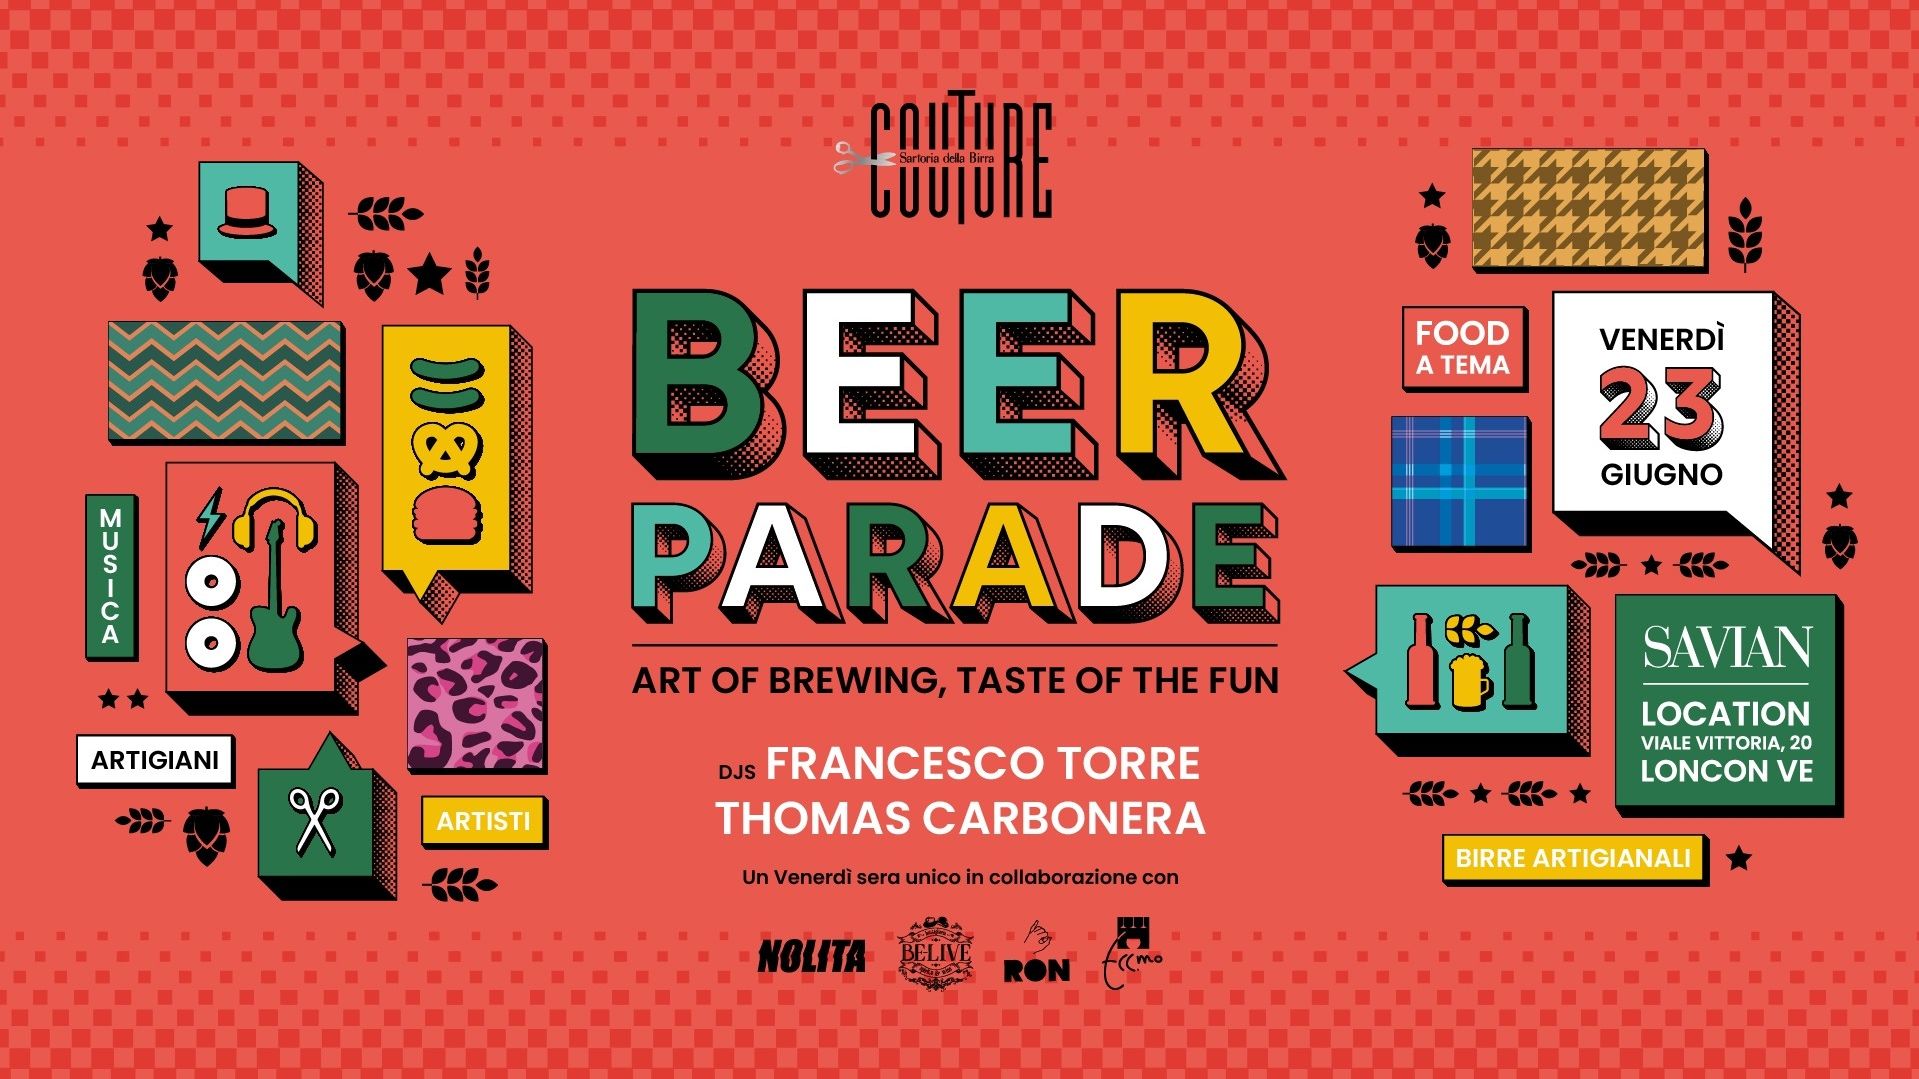 Beerparade - Art Of Brewing, Taste Of The Fun